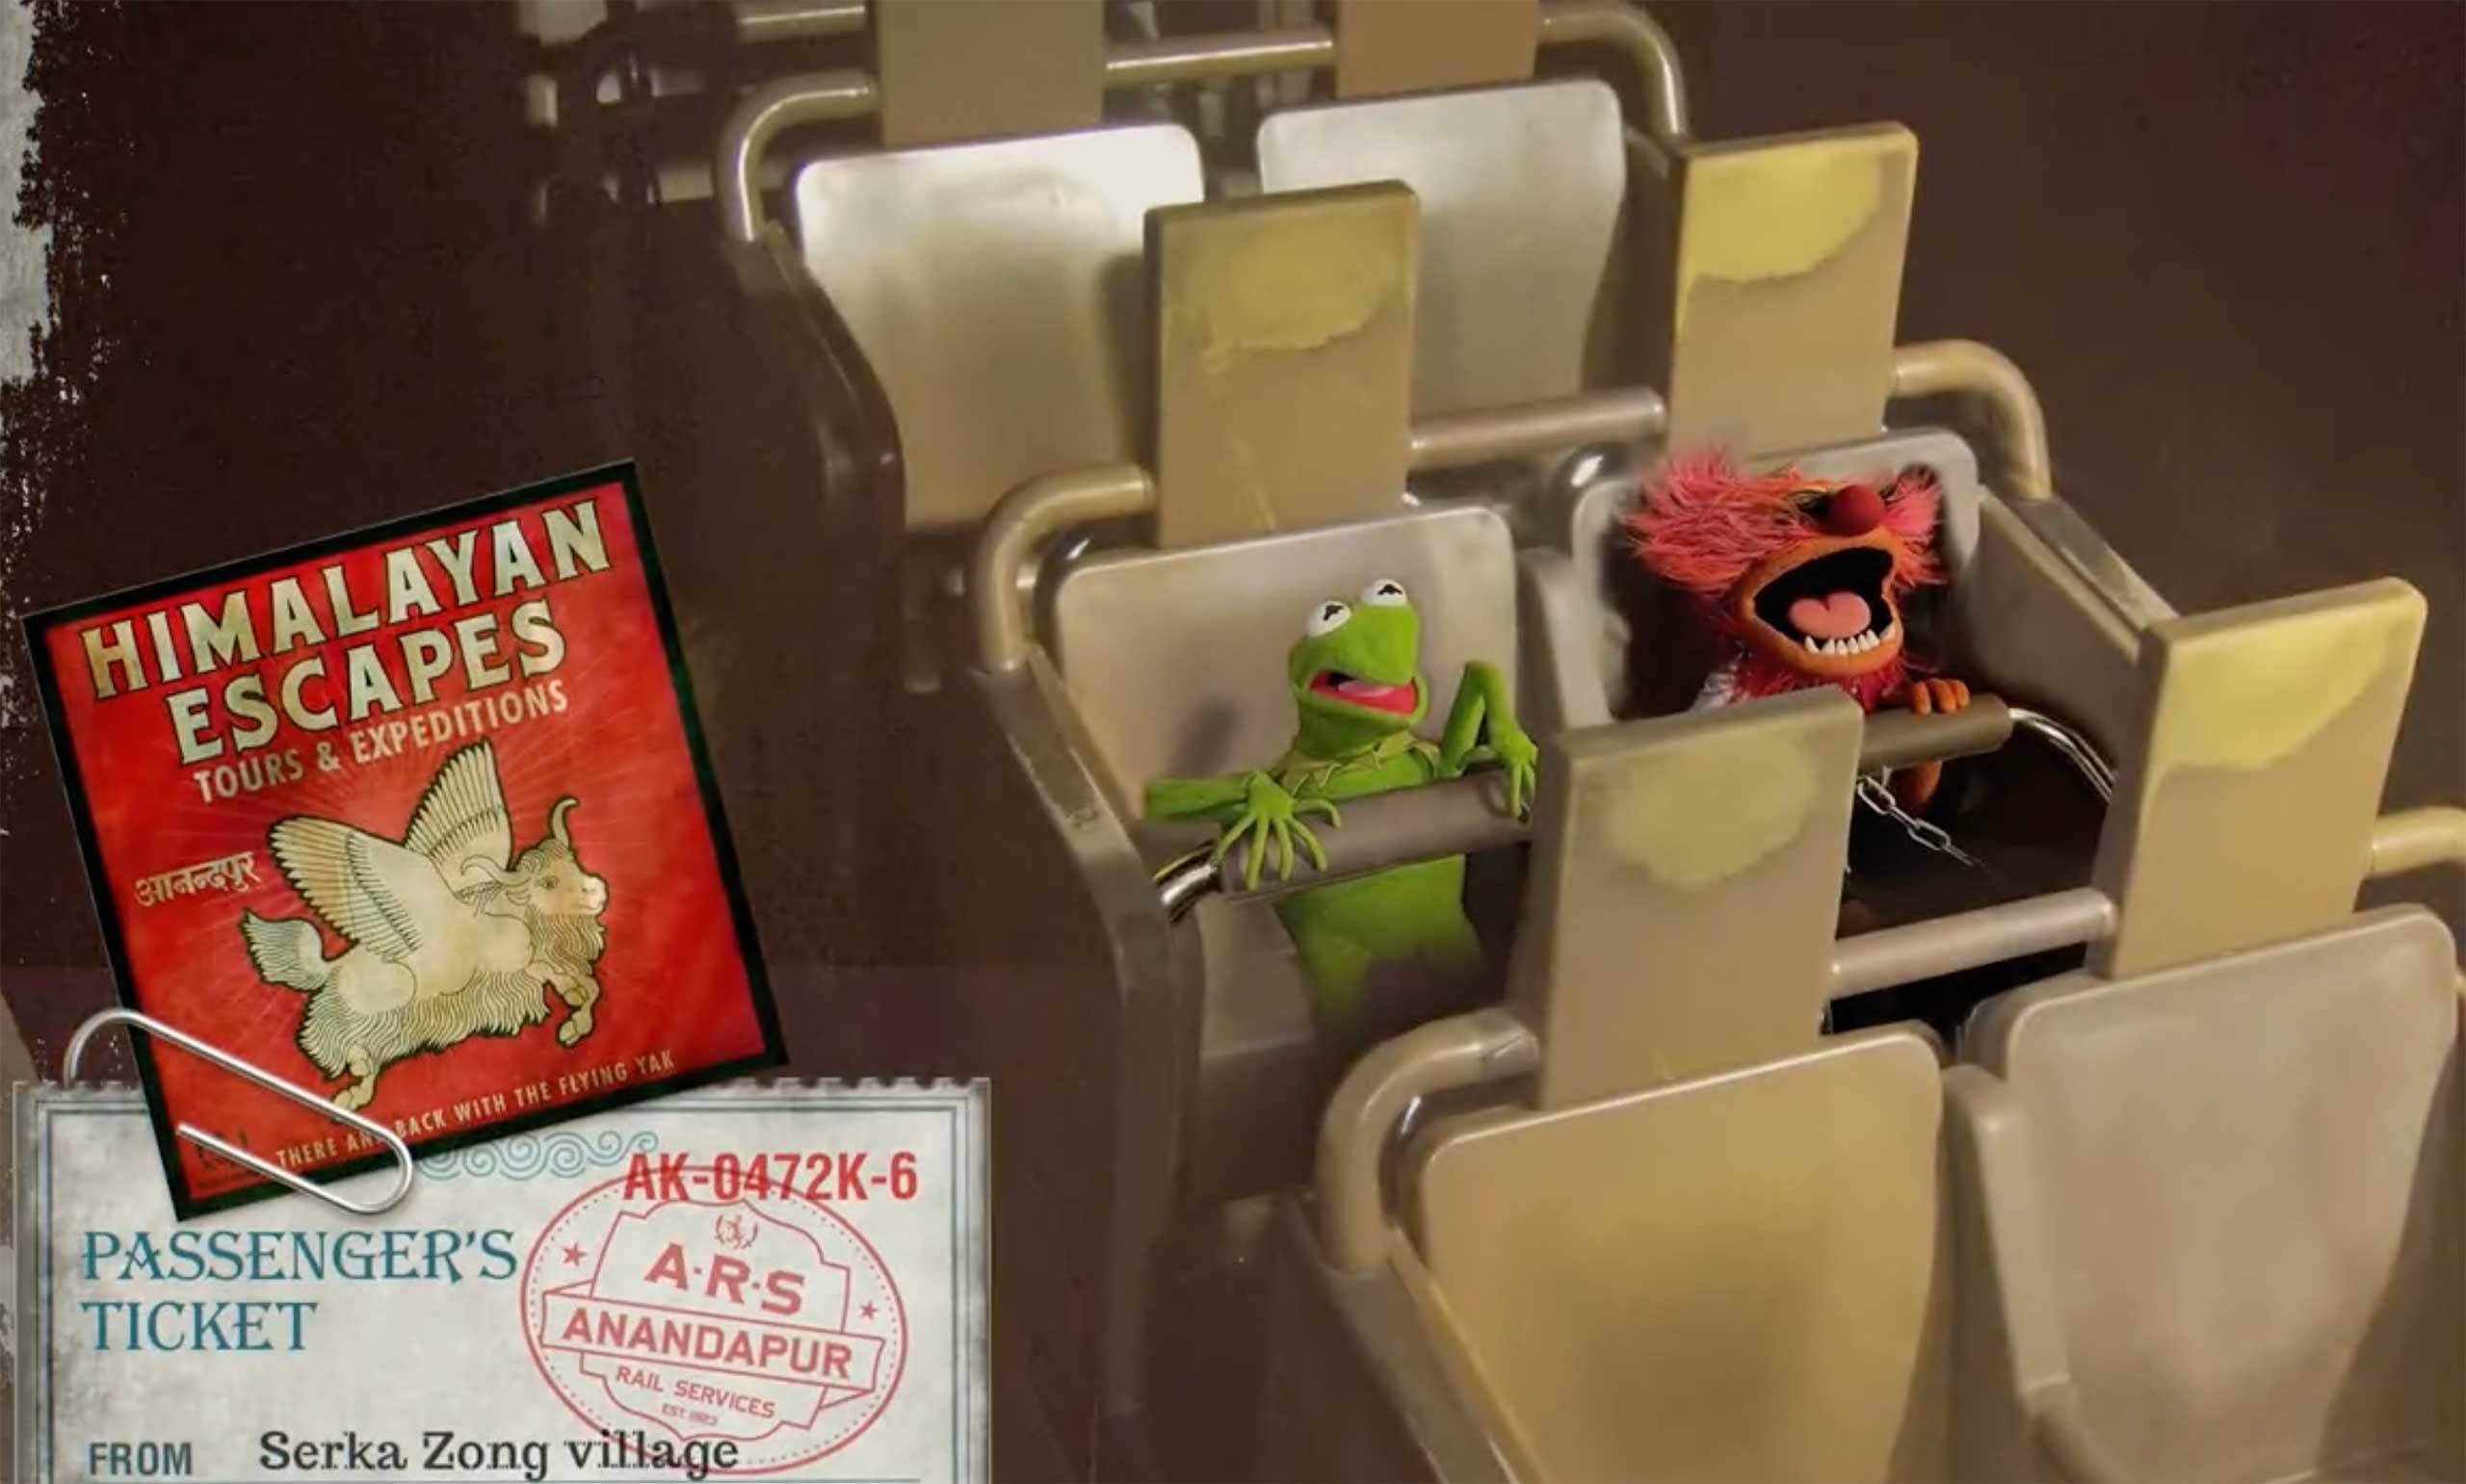 Kermit the Frog and Animal celebrate Disney's Animal Kingdom 25th anniversary